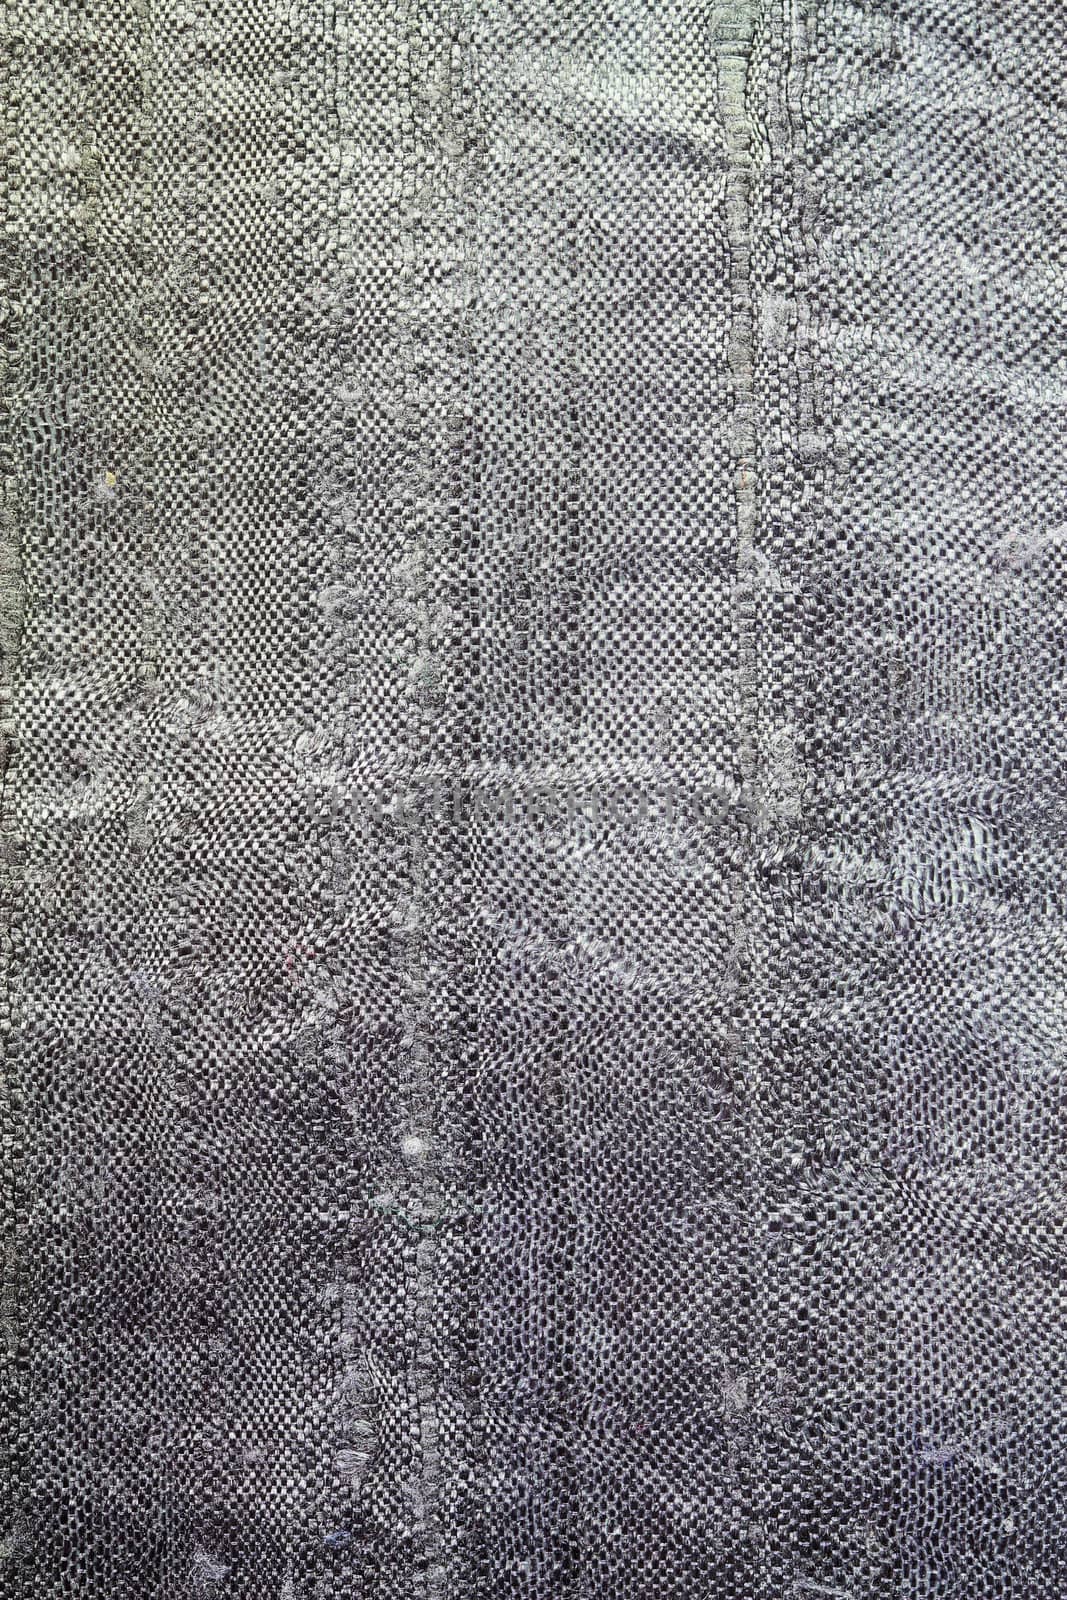 Closes – up fabric texture,  macro by bajita111122